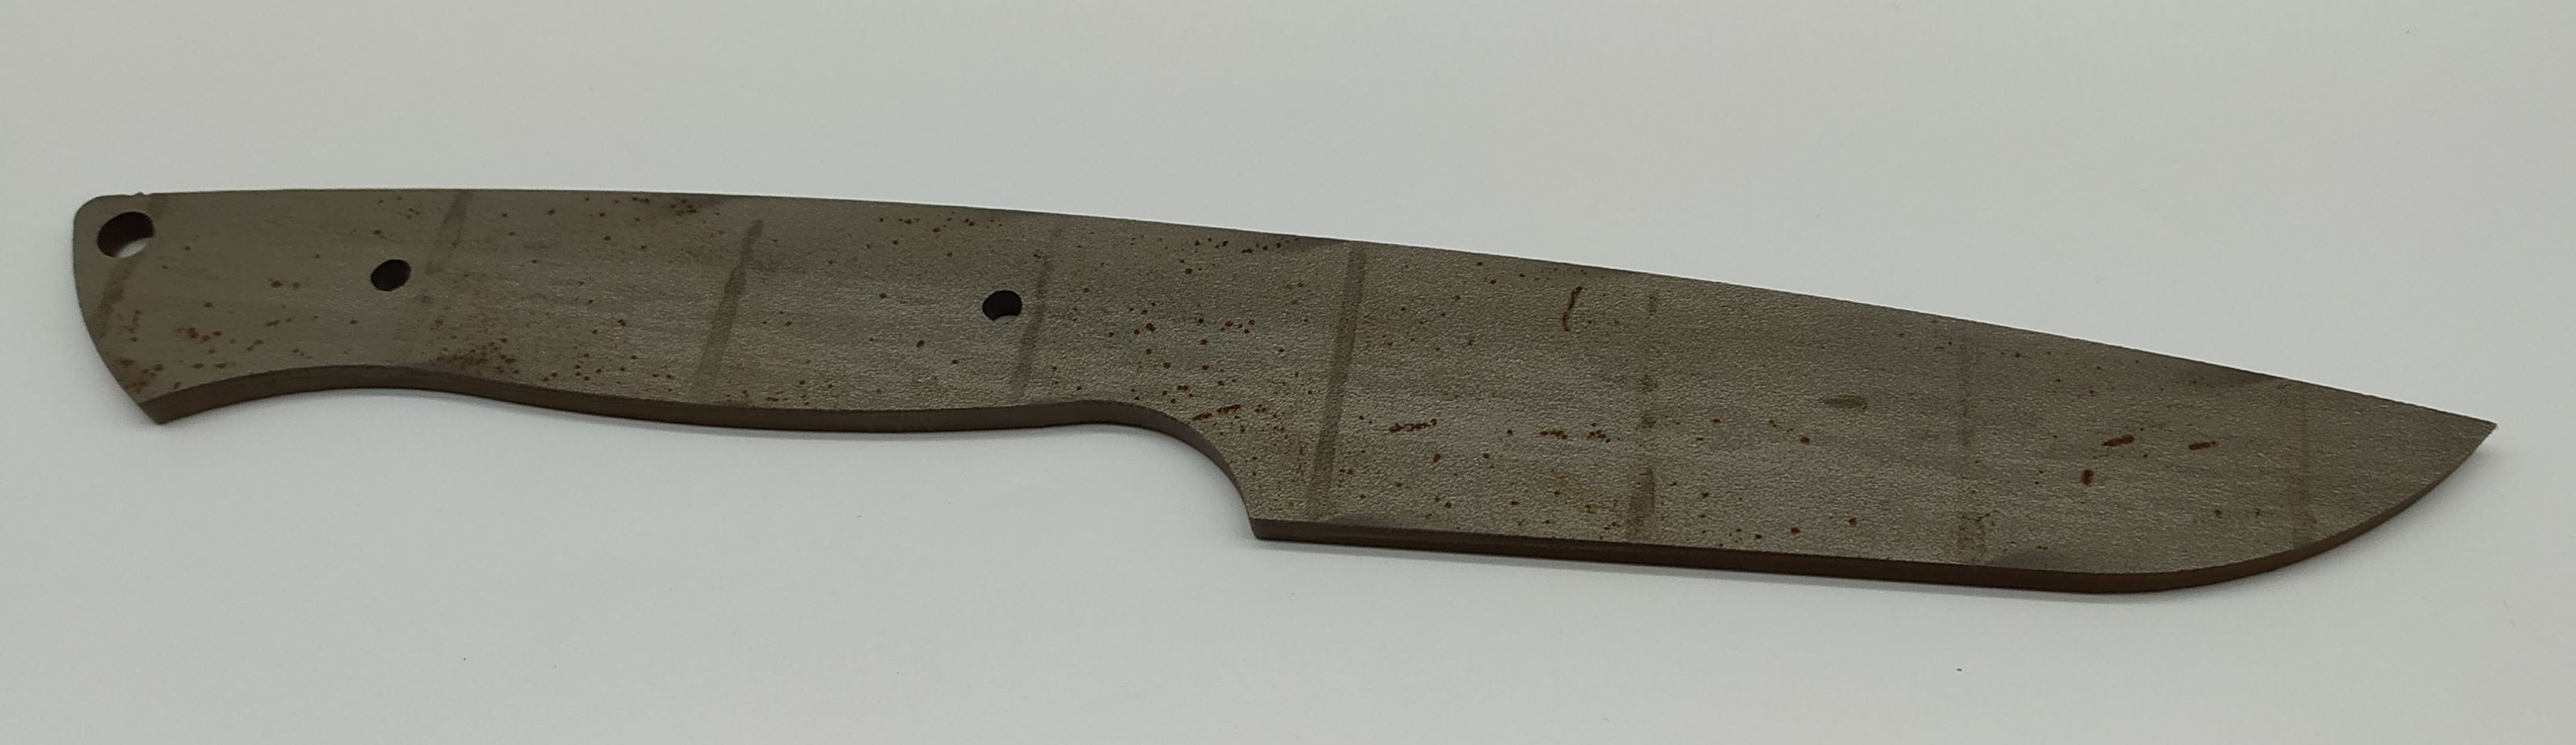 Čepel nože - polotovar 14260 typ č. 05